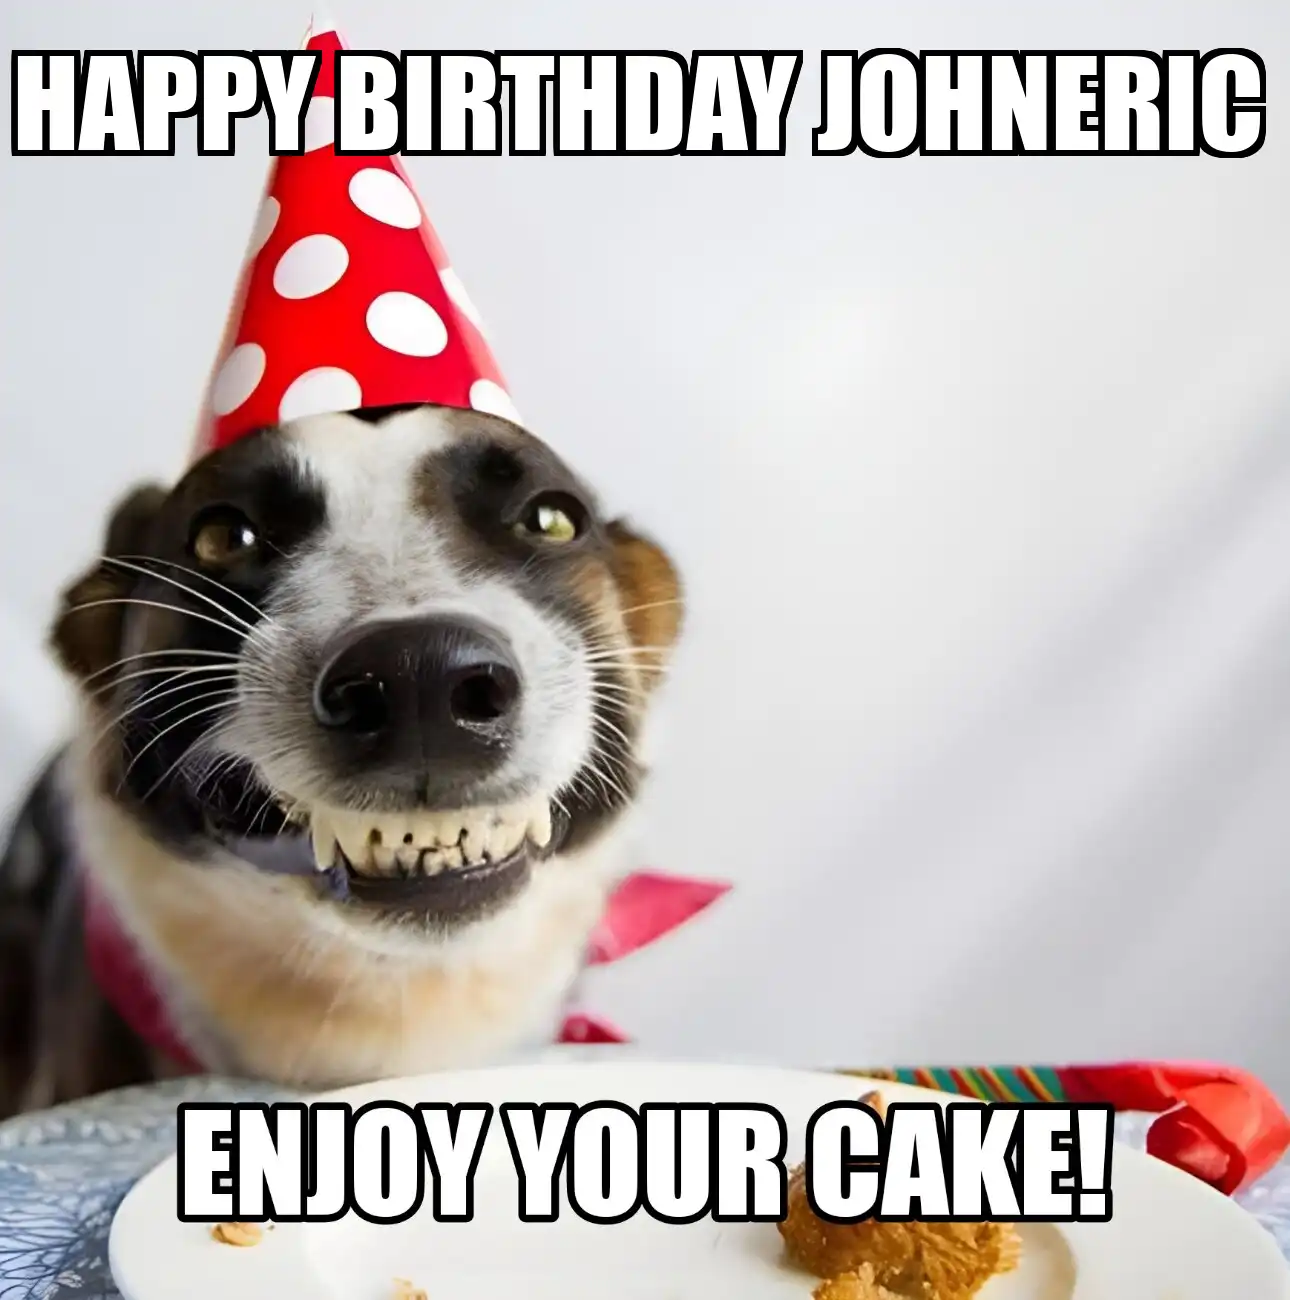 Happy Birthday Johneric Enjoy Your Cake Dog Meme